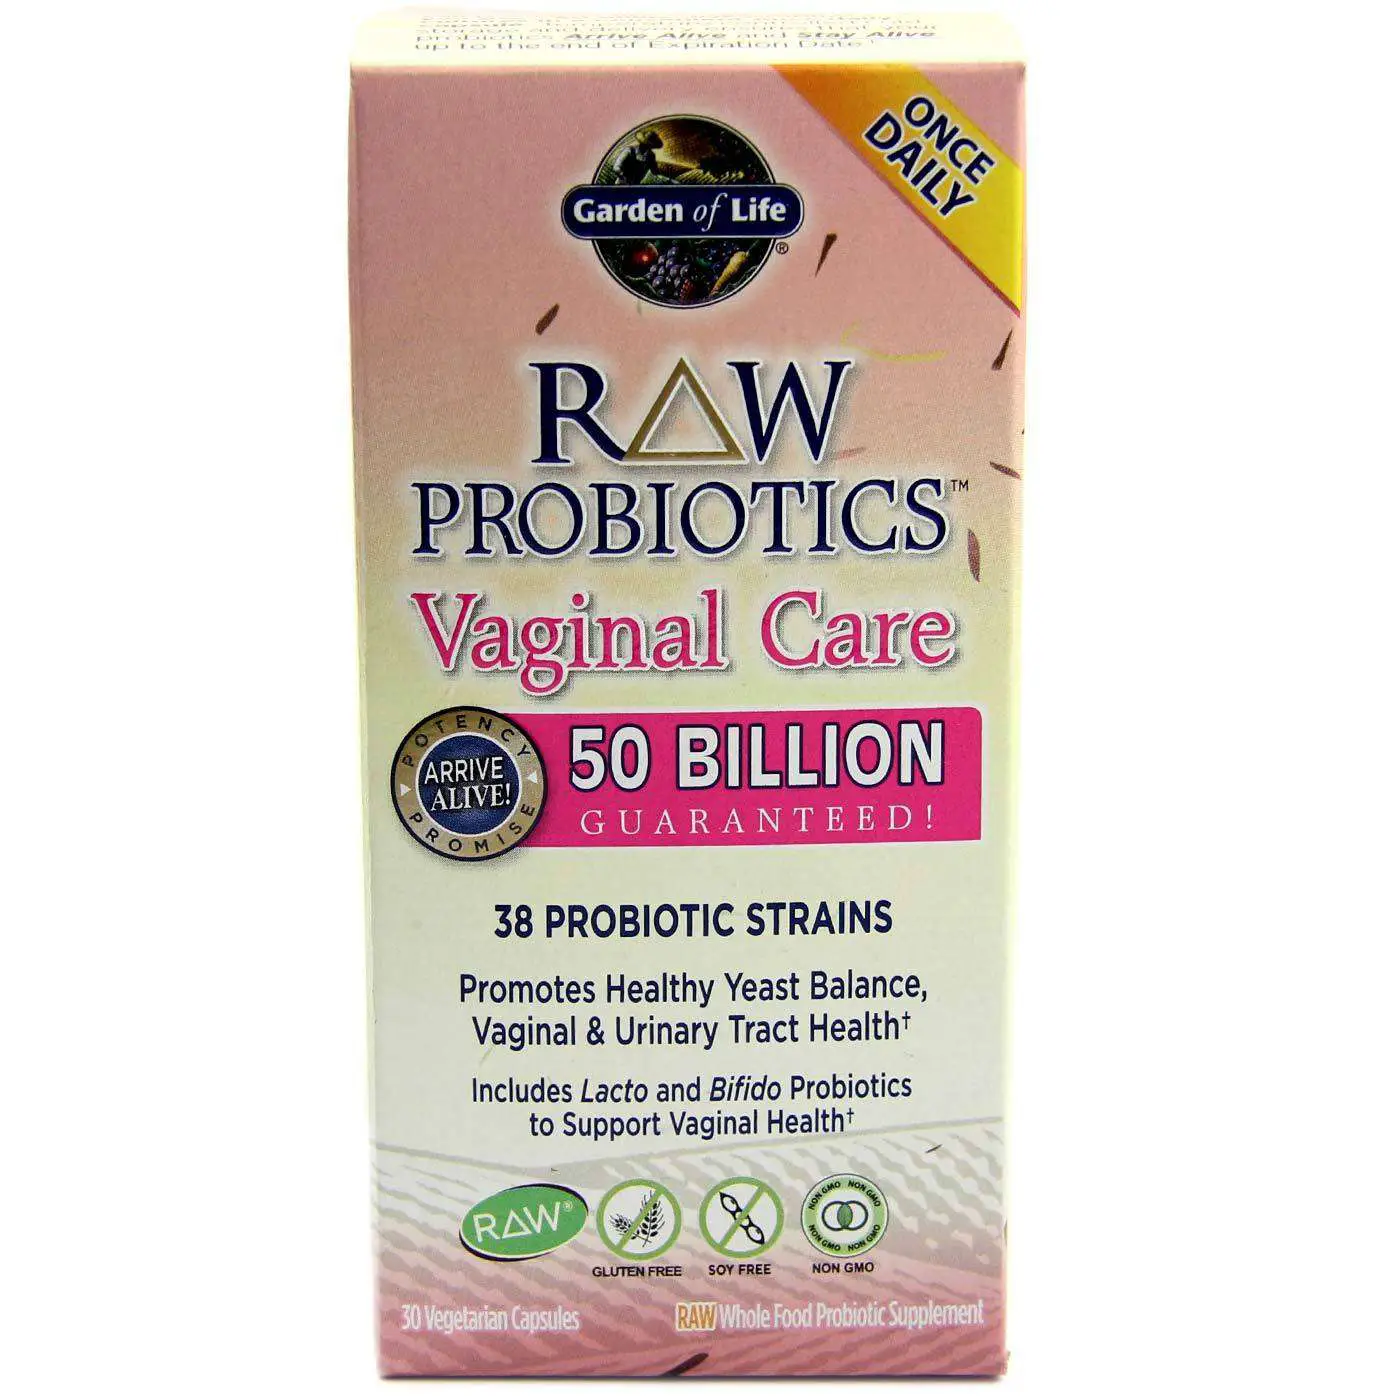 Garden of Life RAW Probiotics Vaginal Care